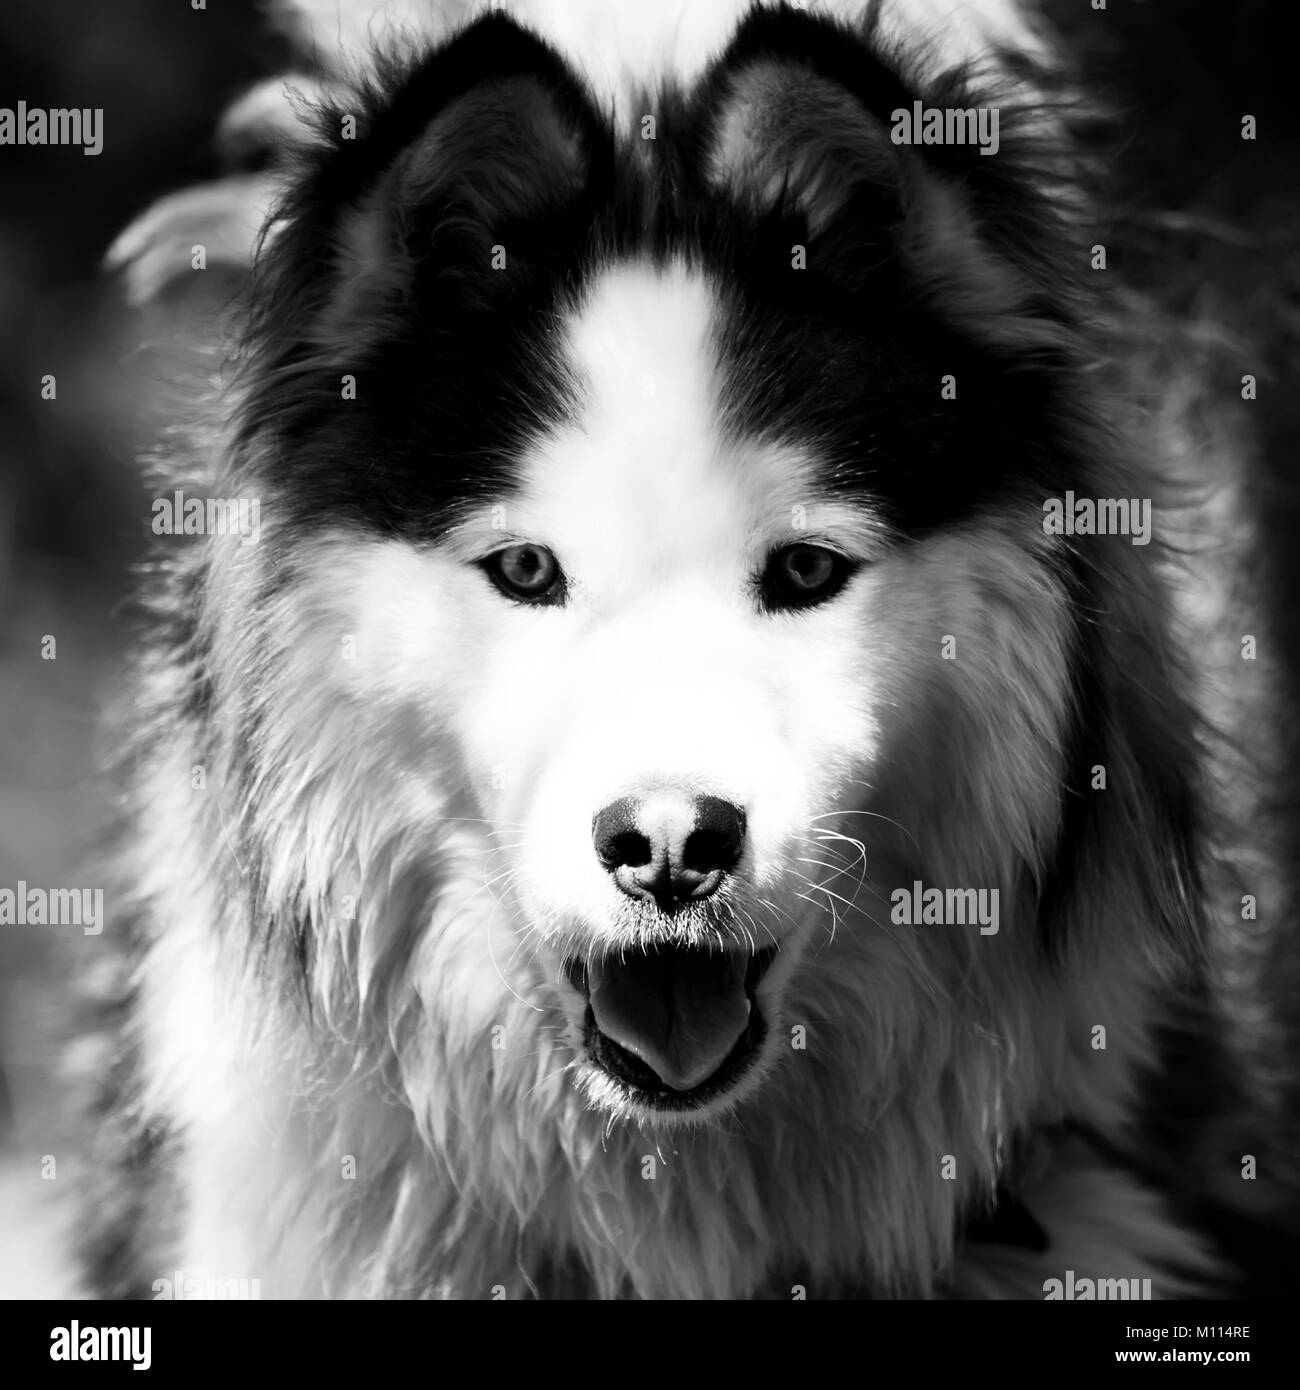 black and white close-up dog portrait Stock Photo